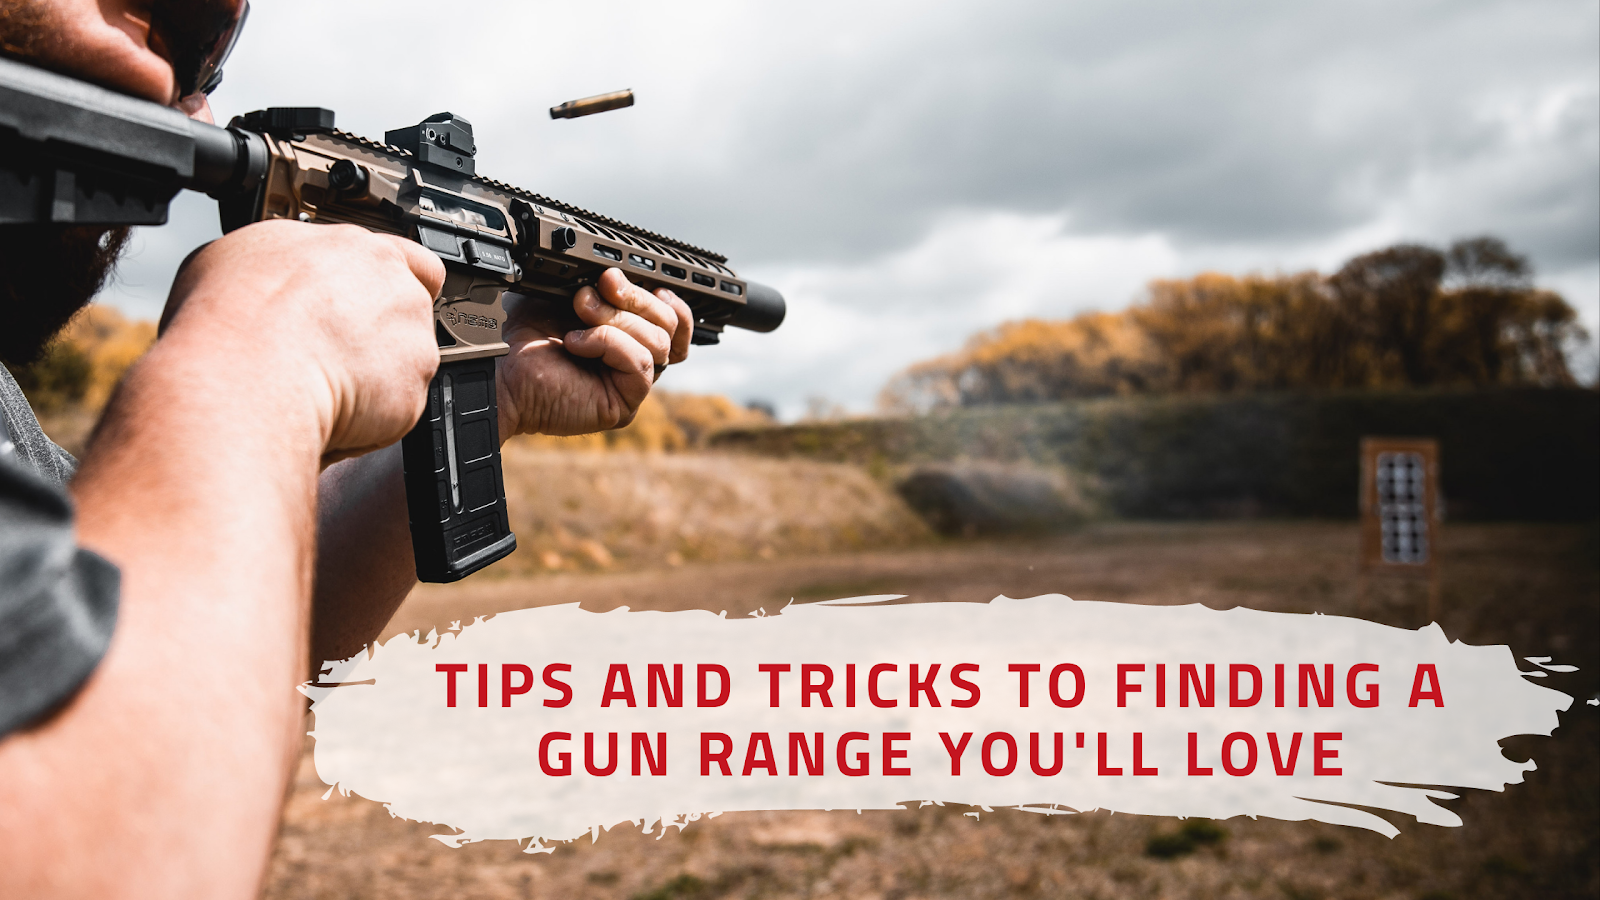 Finding a gun range you'll love